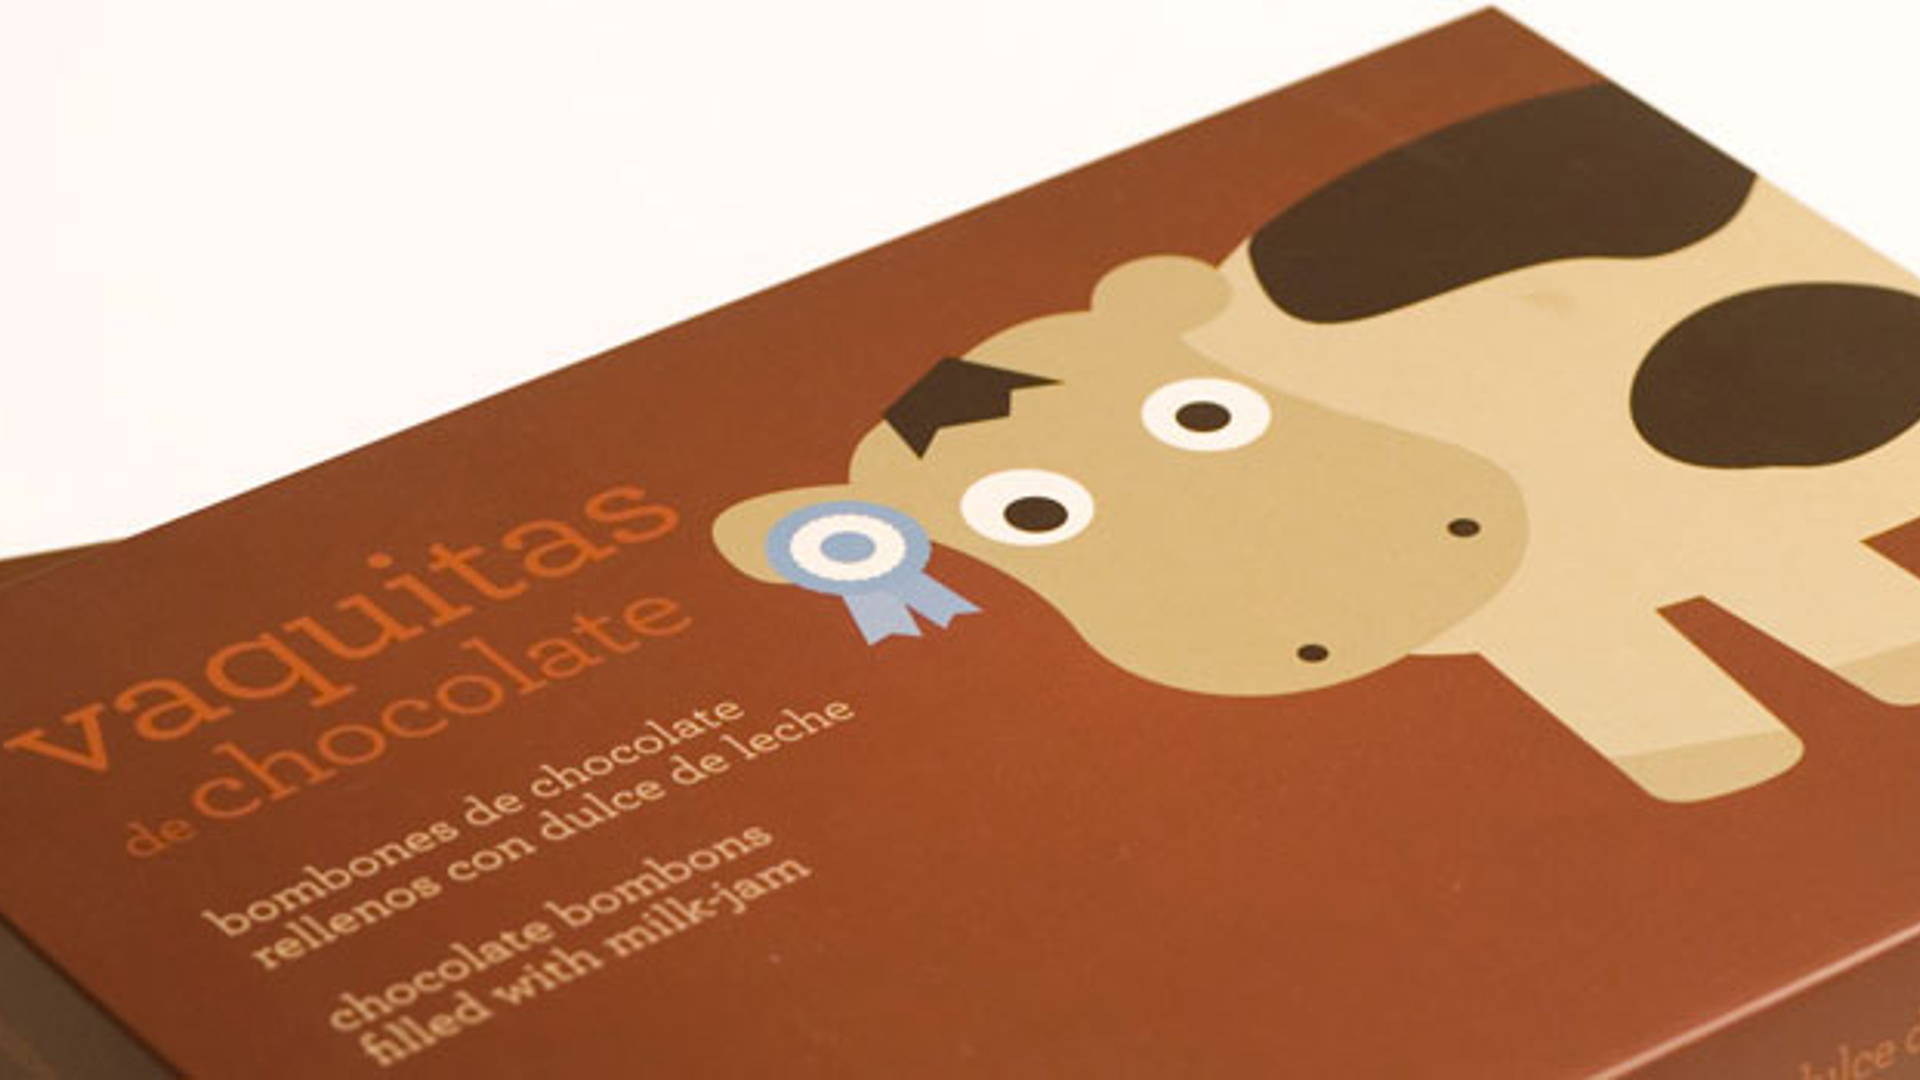 Featured image for Vaquitas de Chocolate